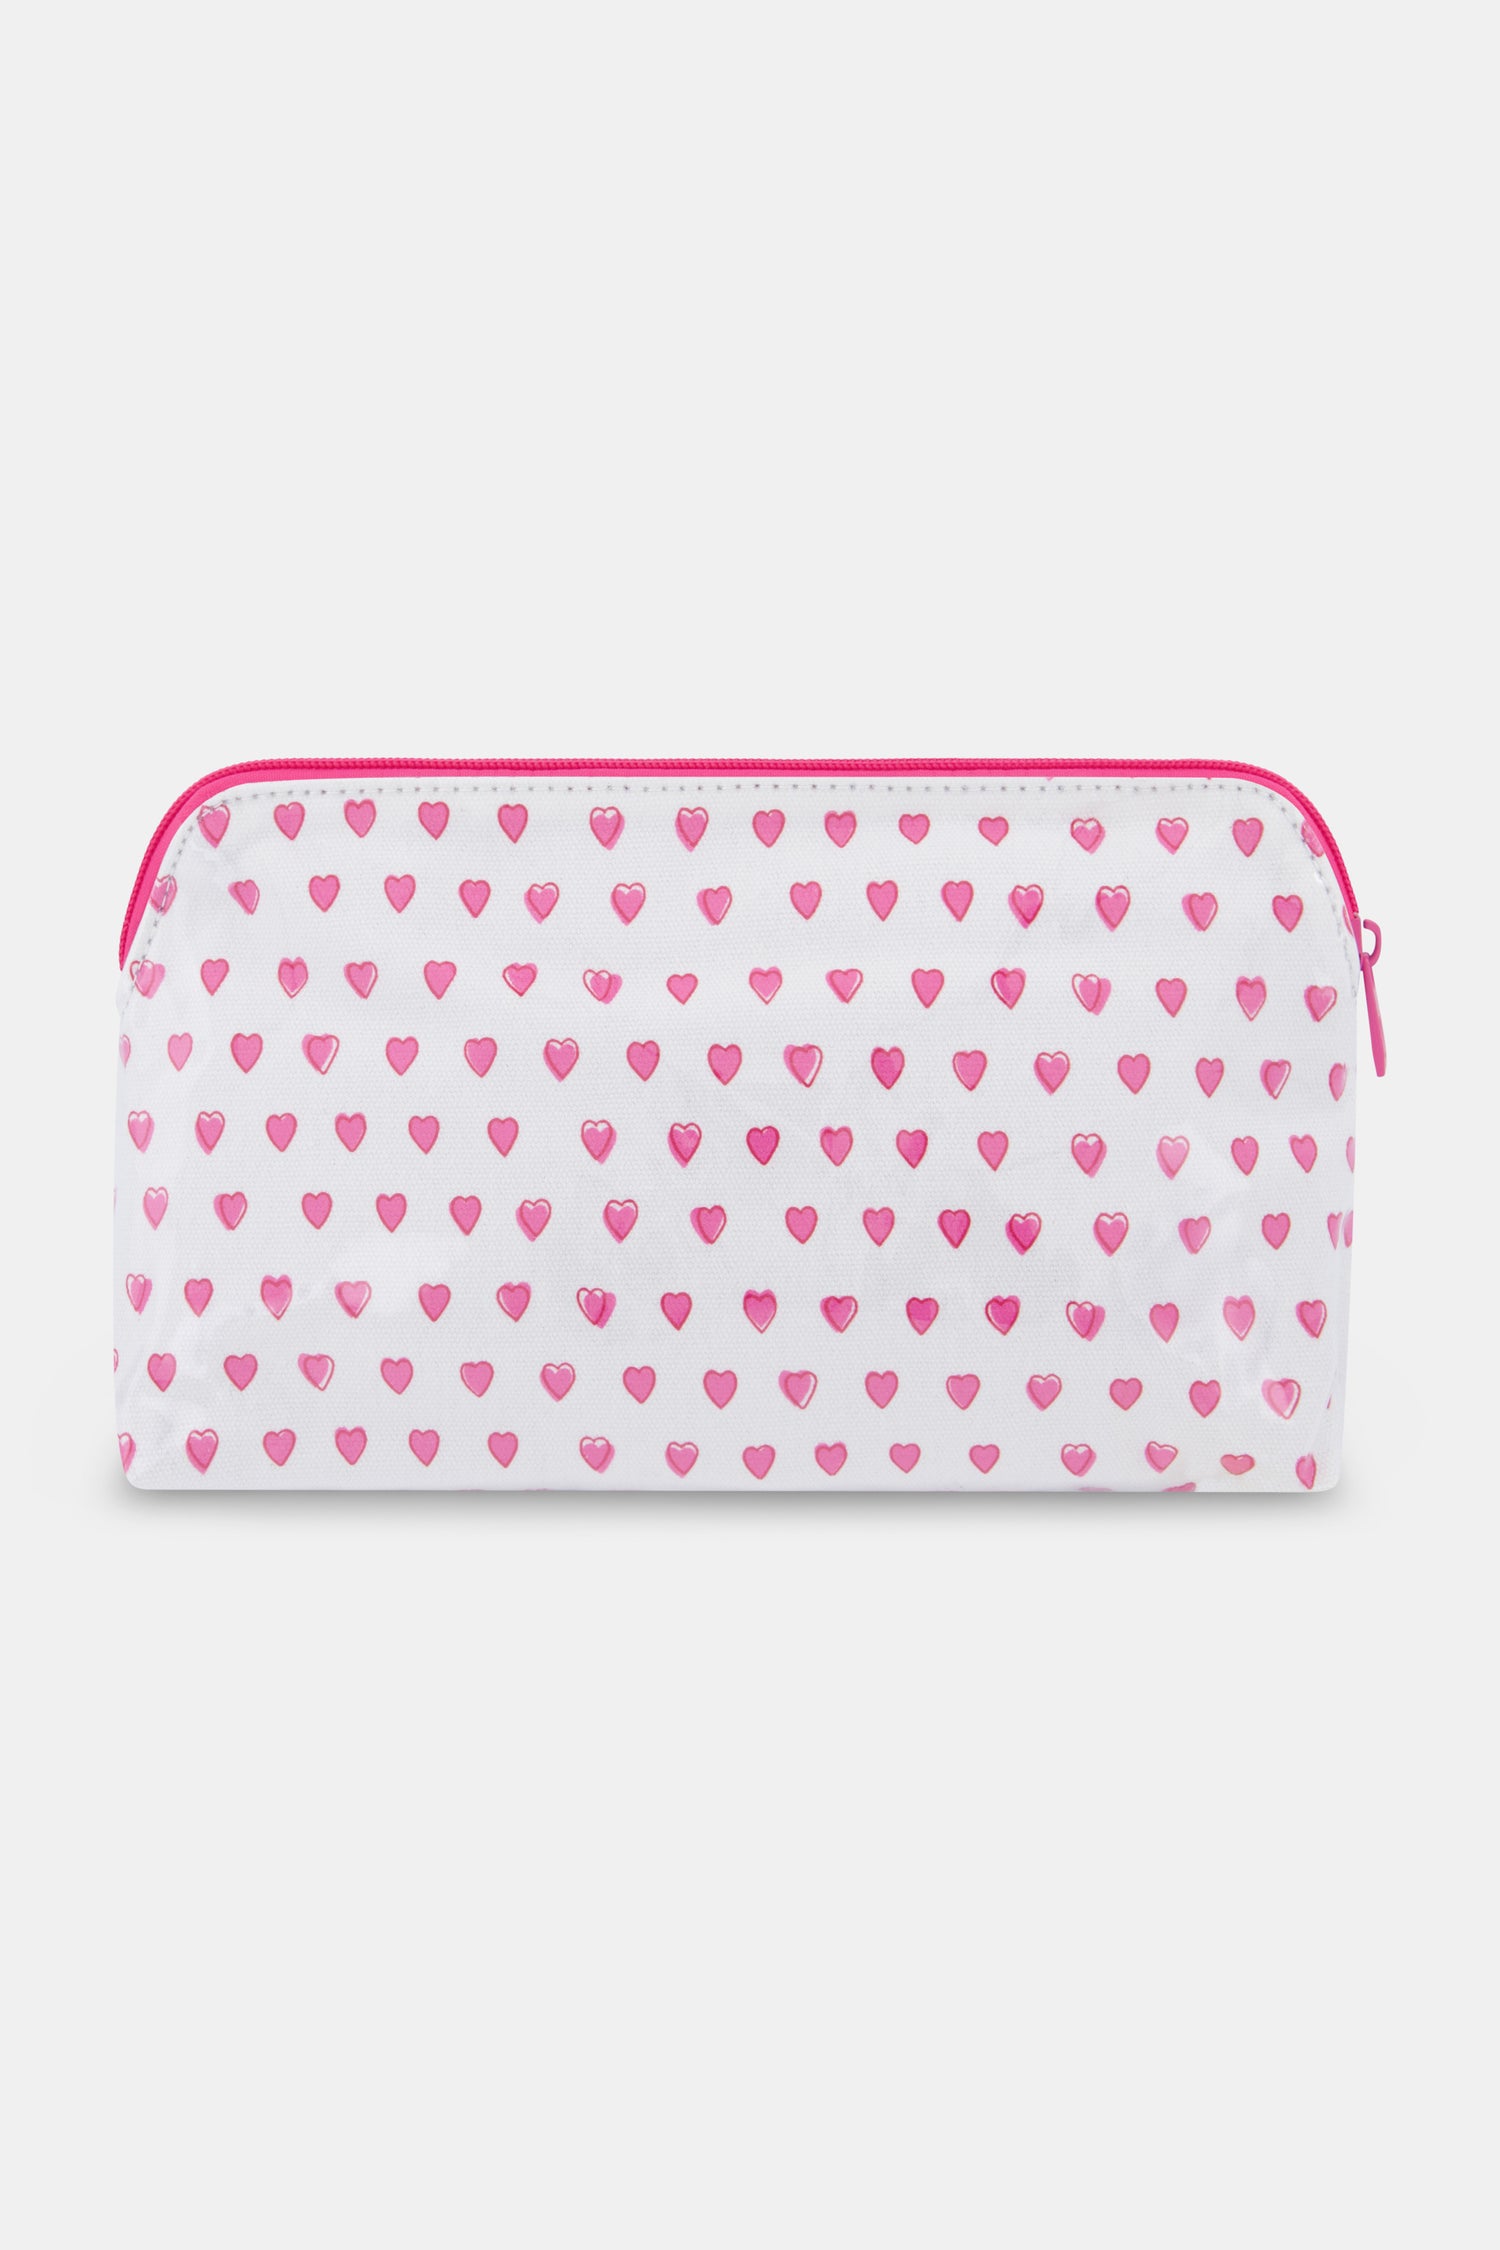 Roller-Rabbit-Hearts-Makeup-Bag-Pink